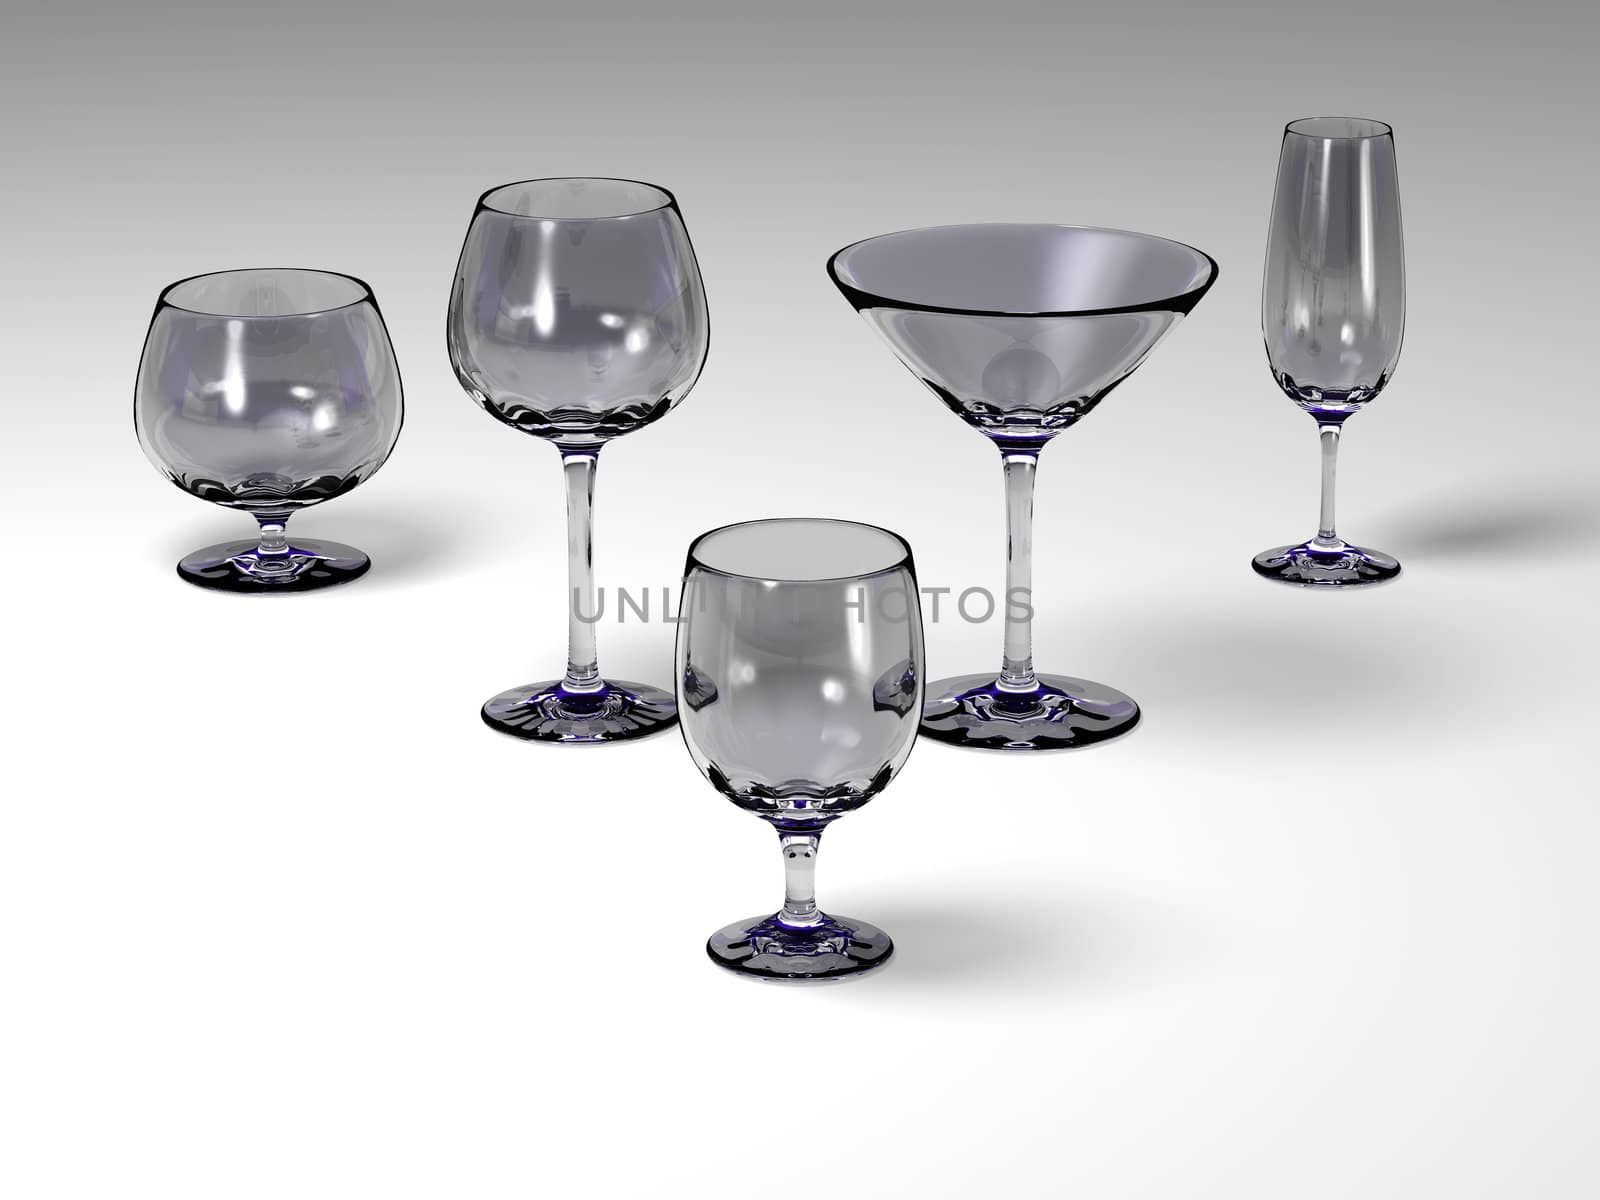 Five empty glasses by shkyo30